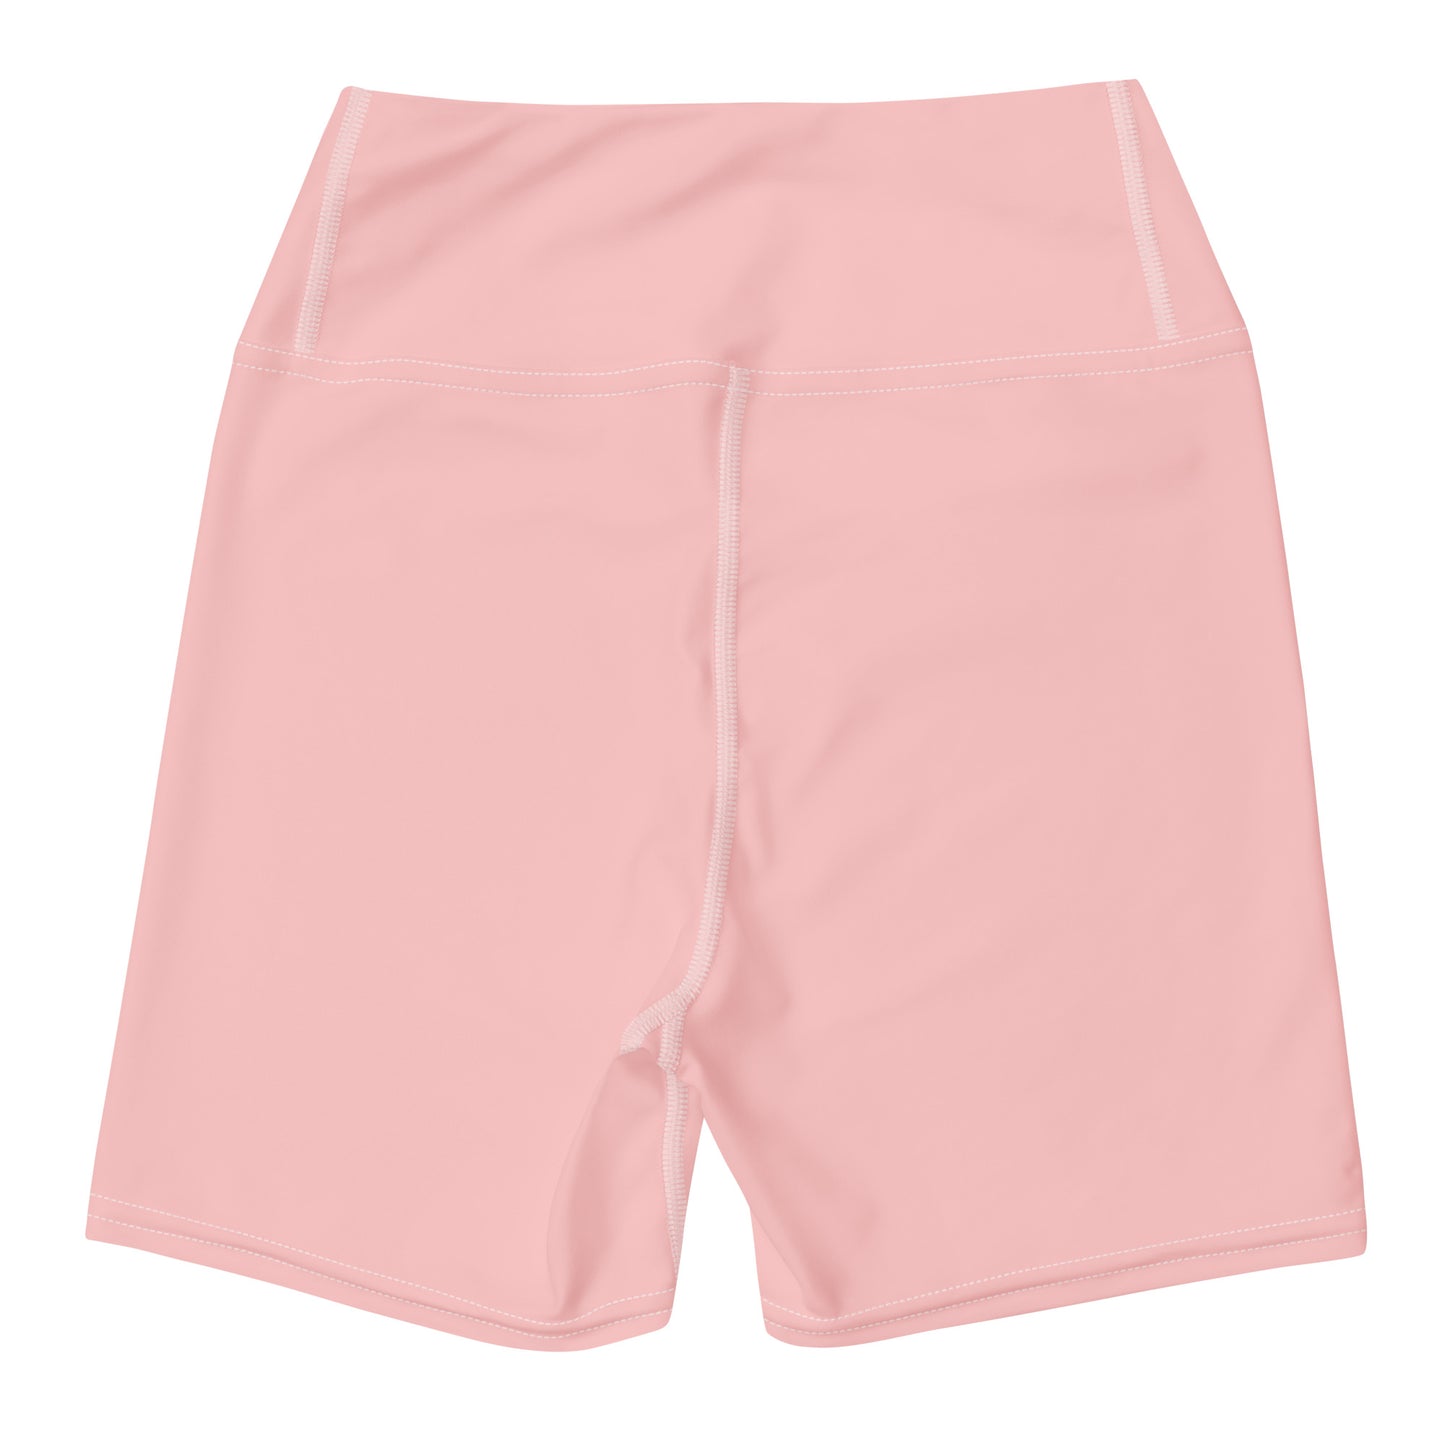 Voyager Pink High-Waisted Yoga Shorts